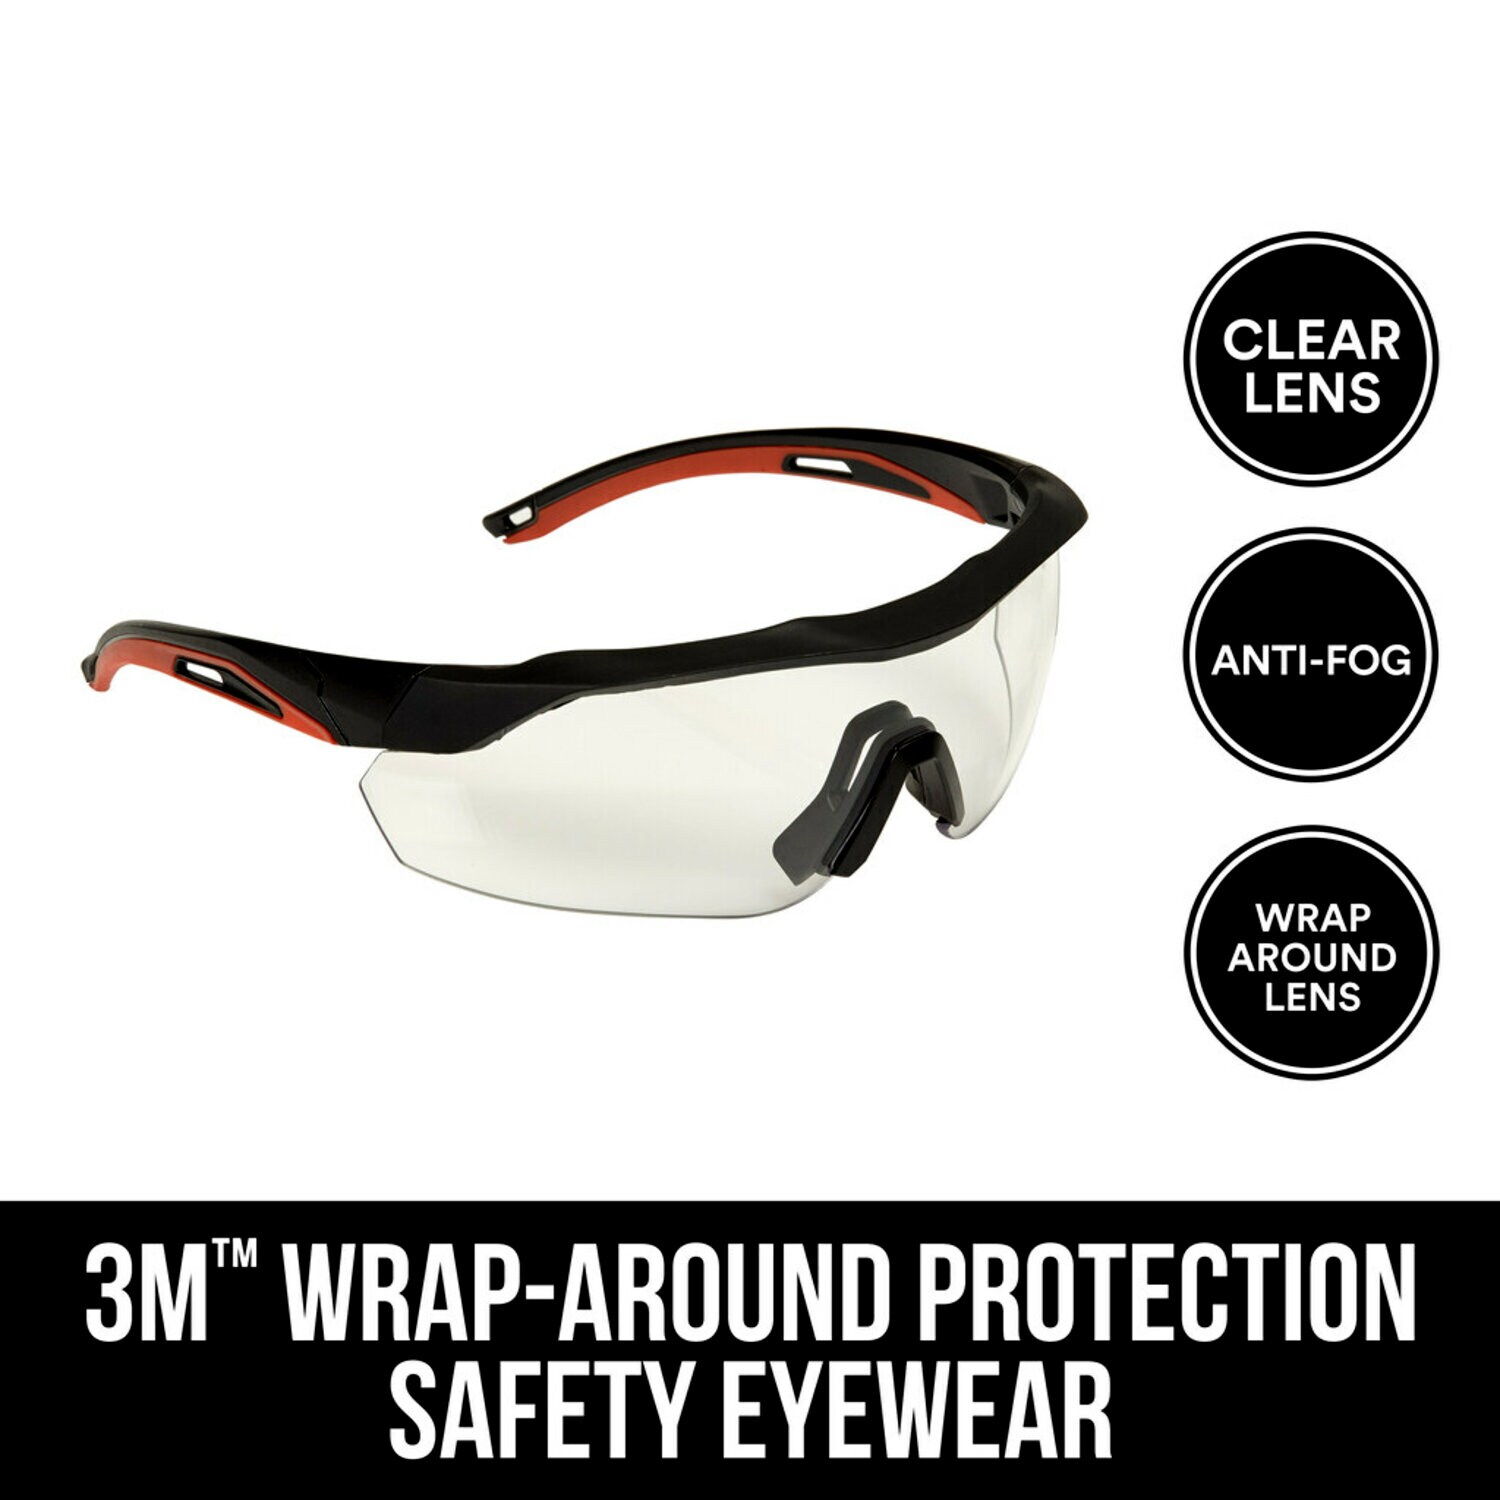 7100153543 - 3M Performance Eyewear Anti-Fog, 47090H1-DC, Black/Red, Clear Lens,
4/case